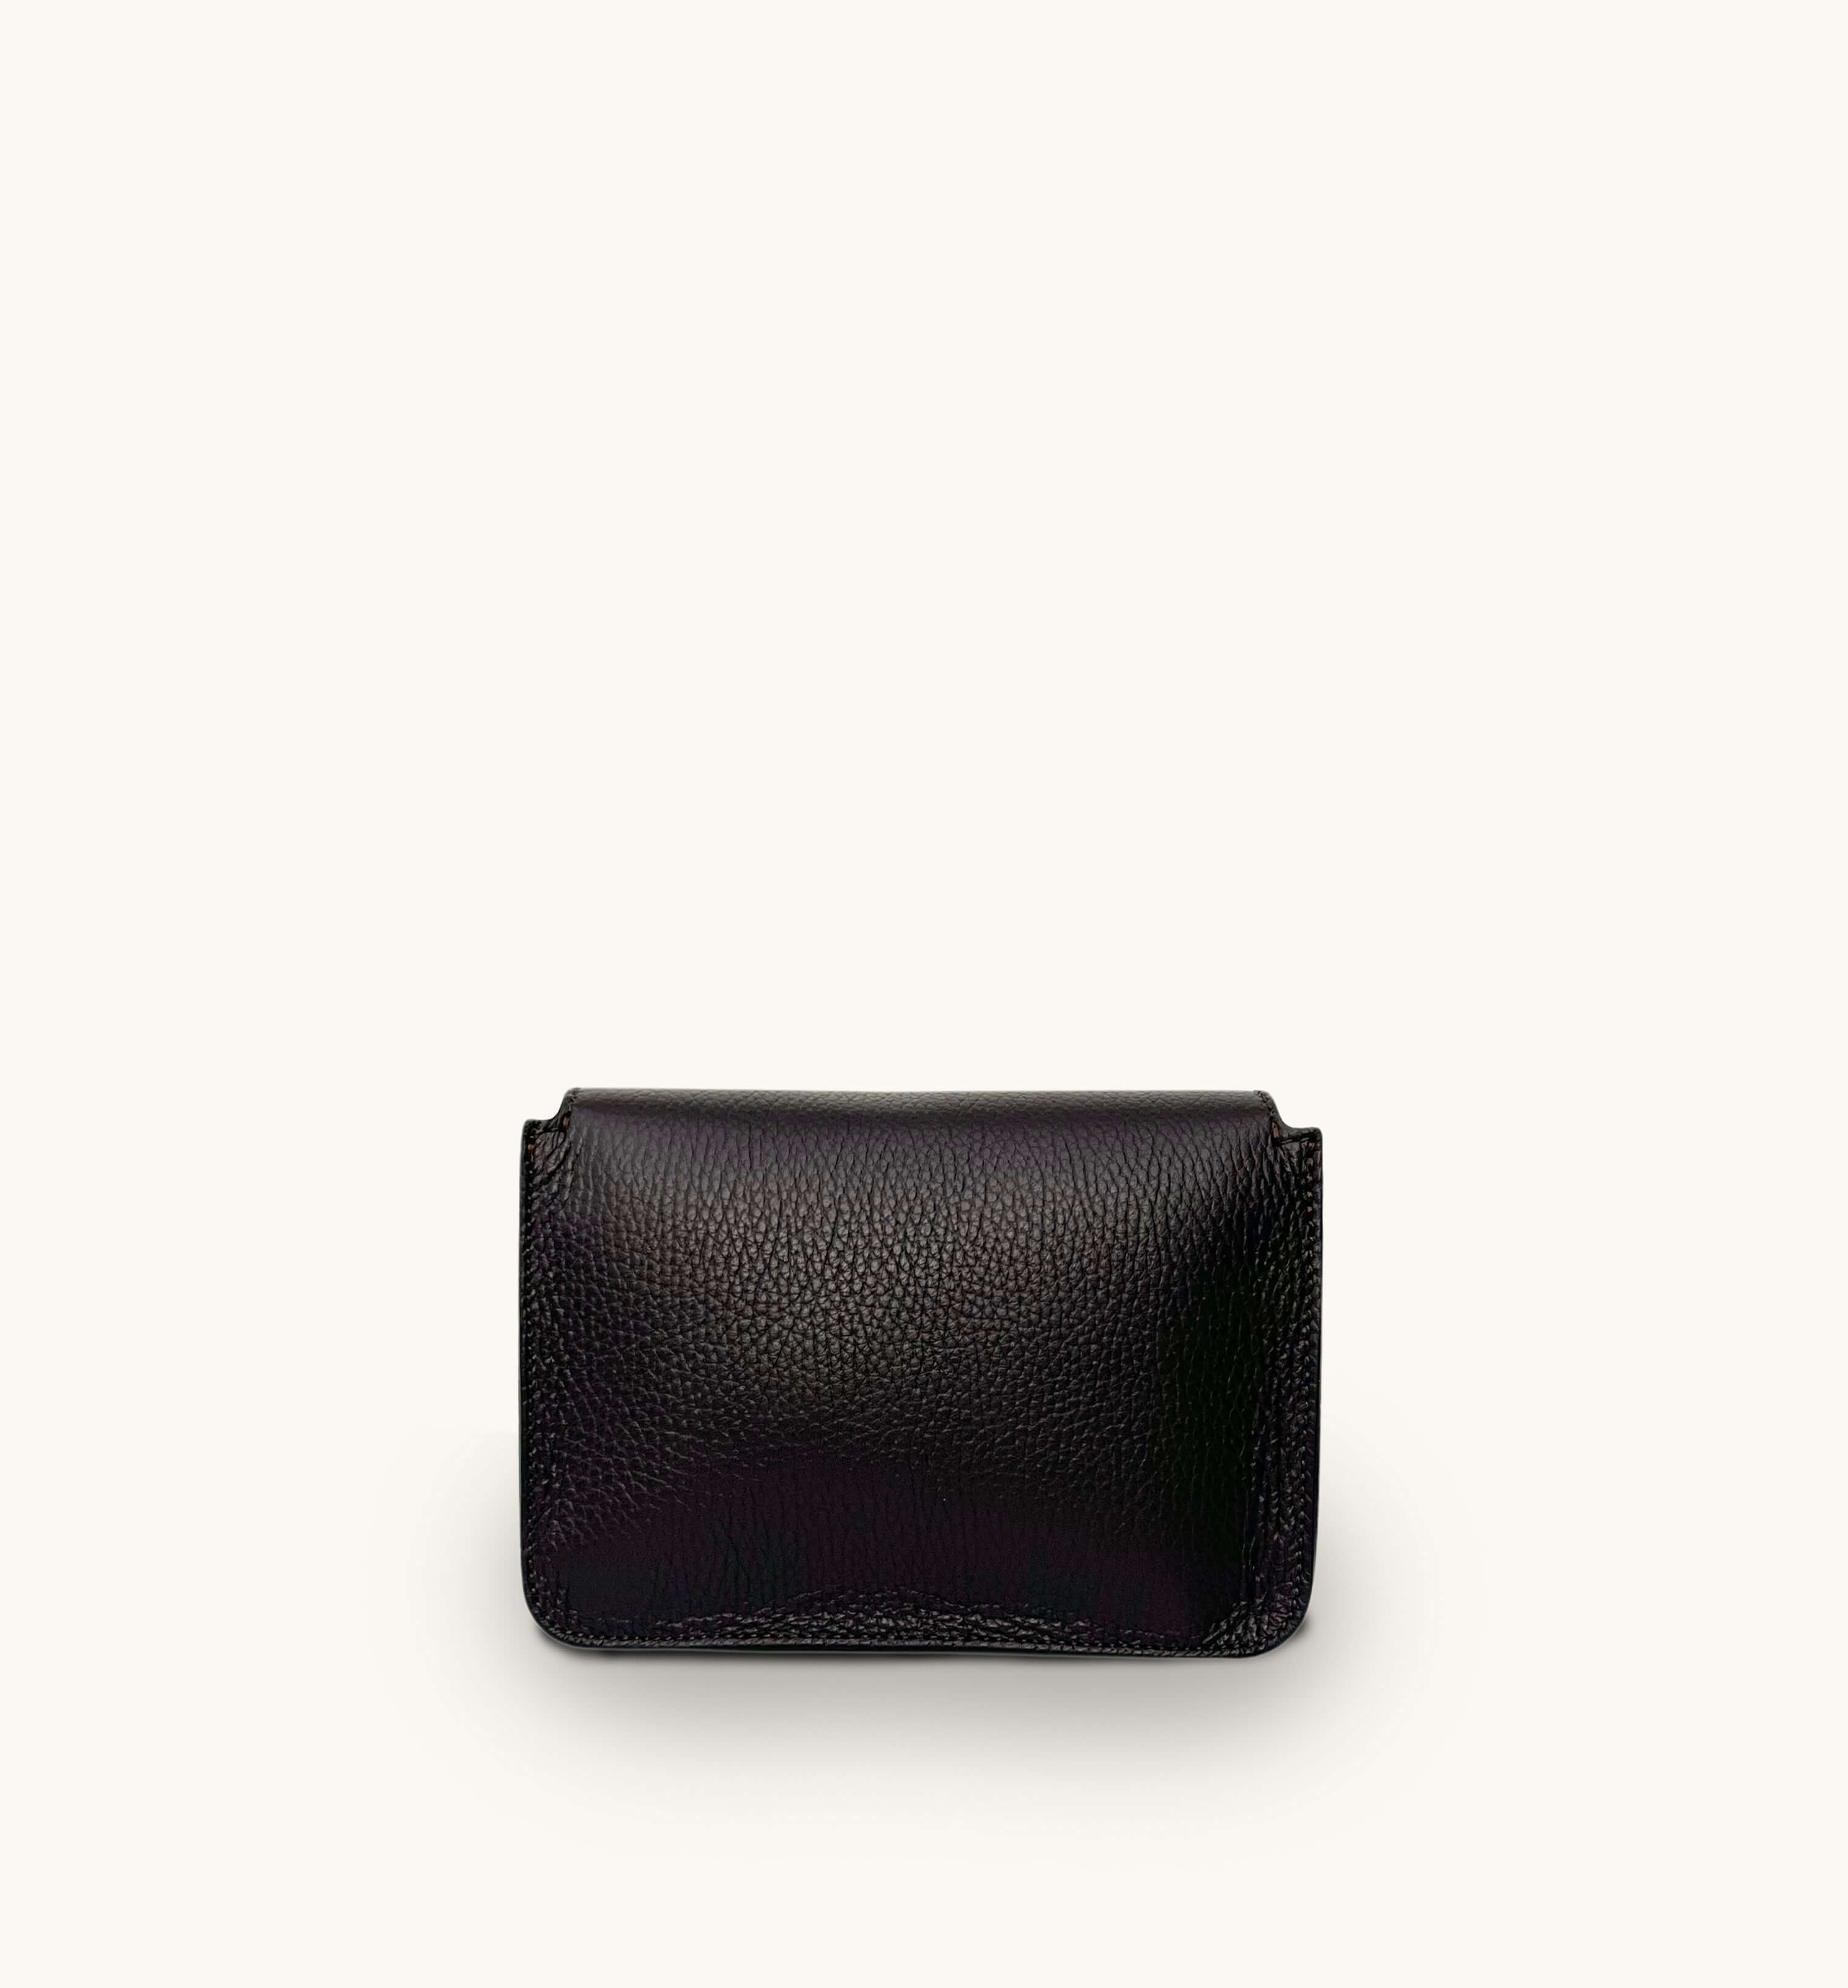 The Newbury Chocolate Leather Bag